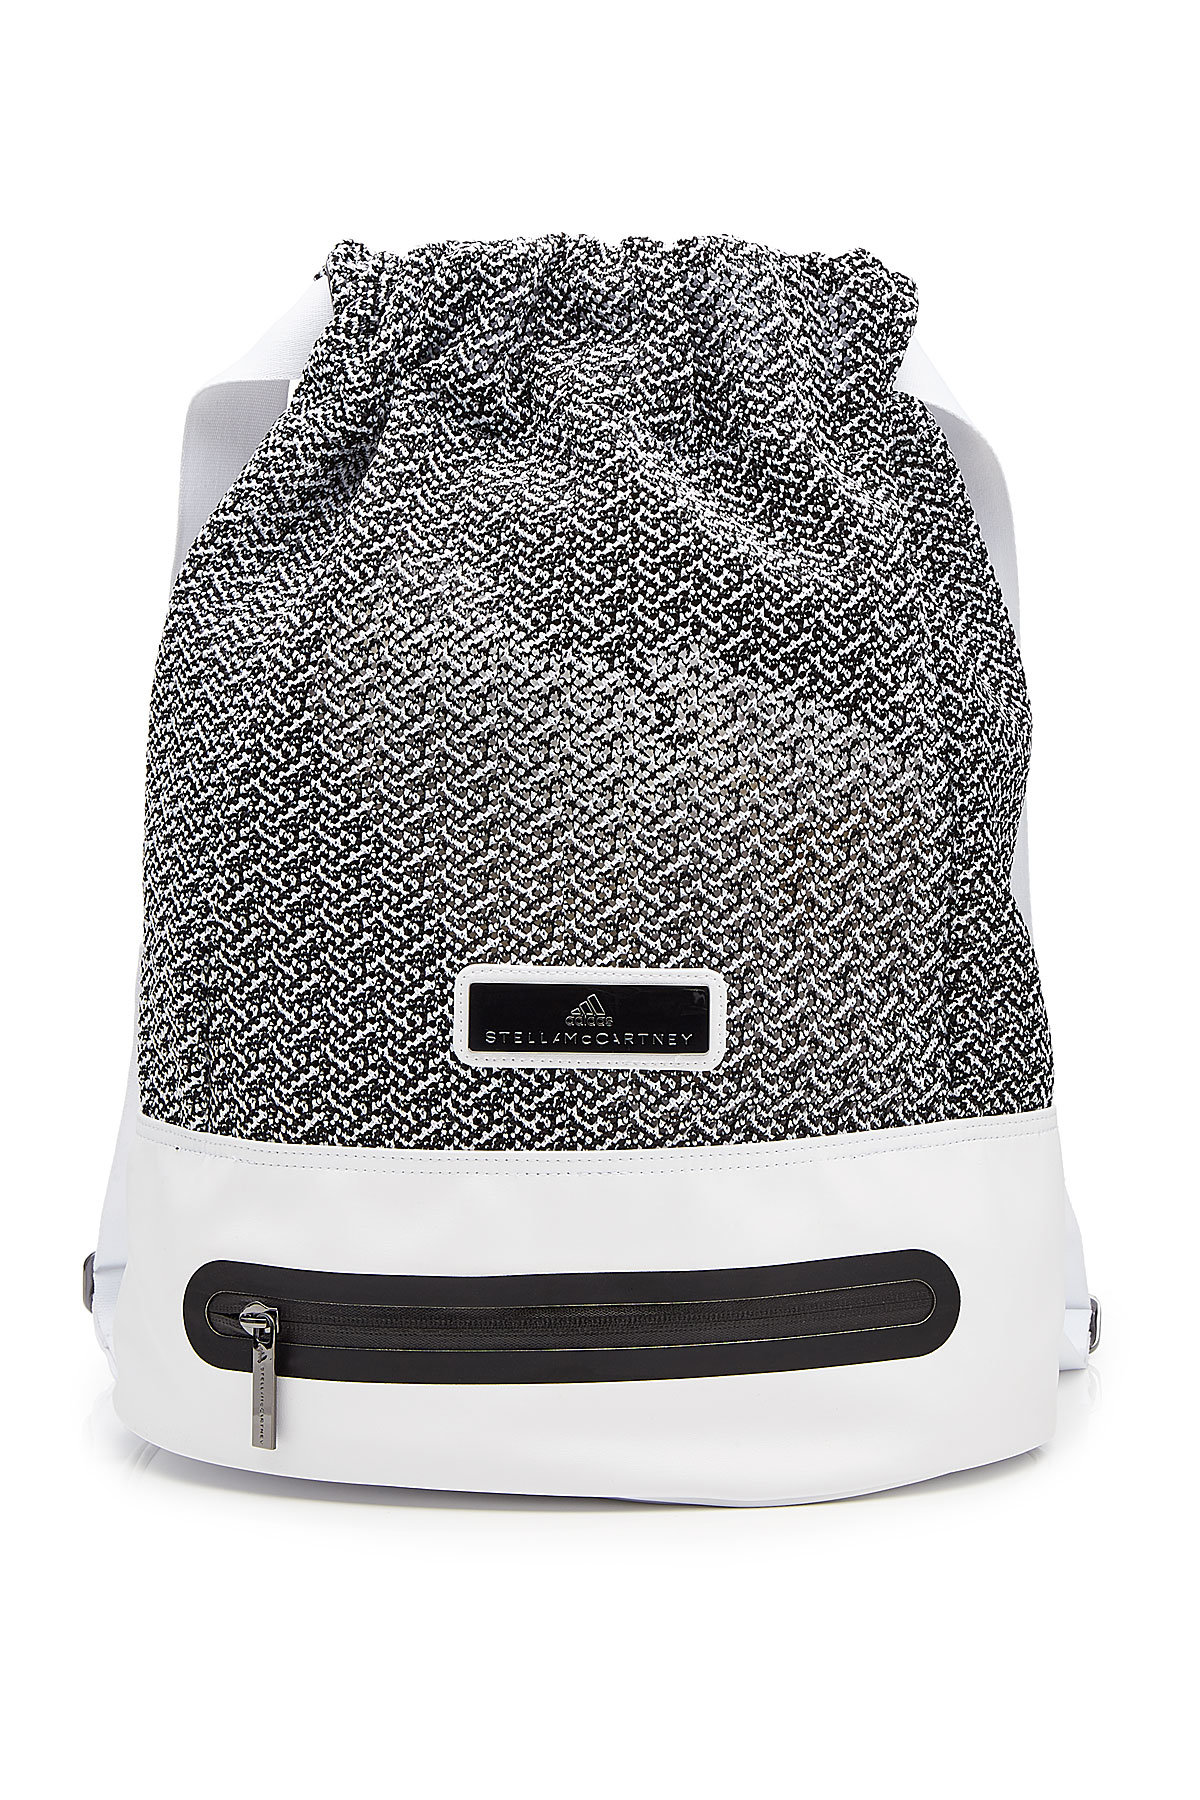 adidas by Stella McCartney - Knit Backpack